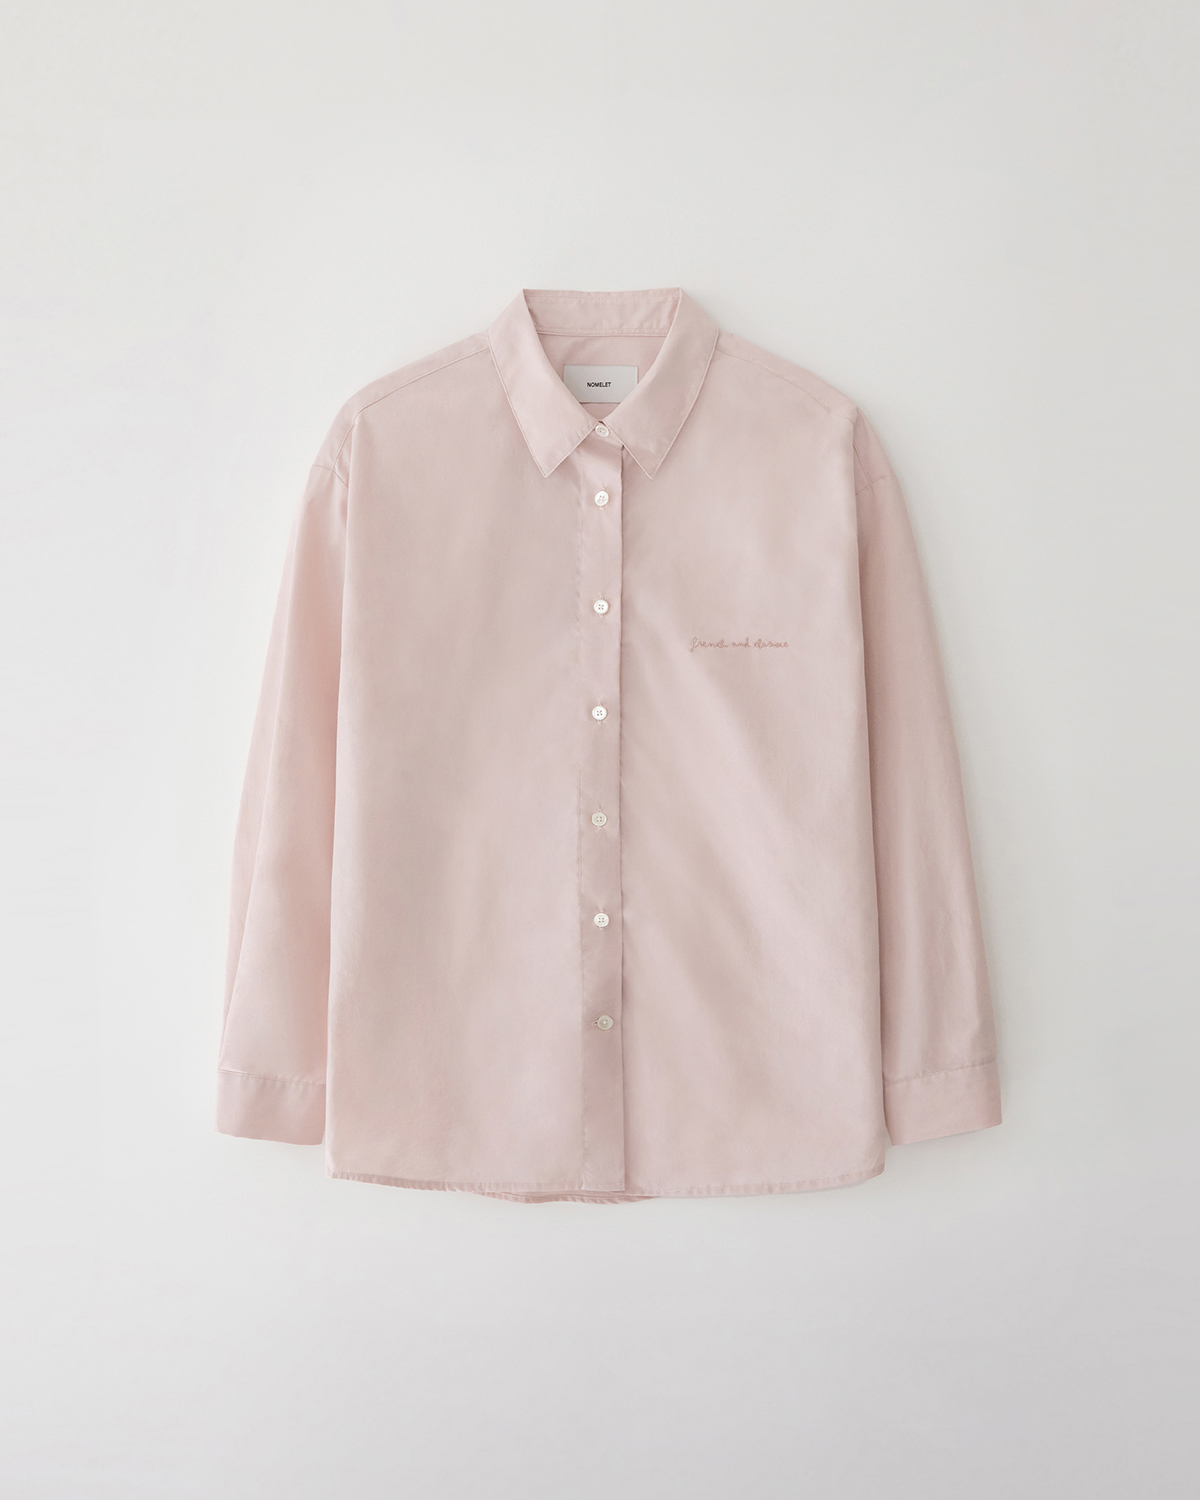 Marche cotton shirt - blush pink